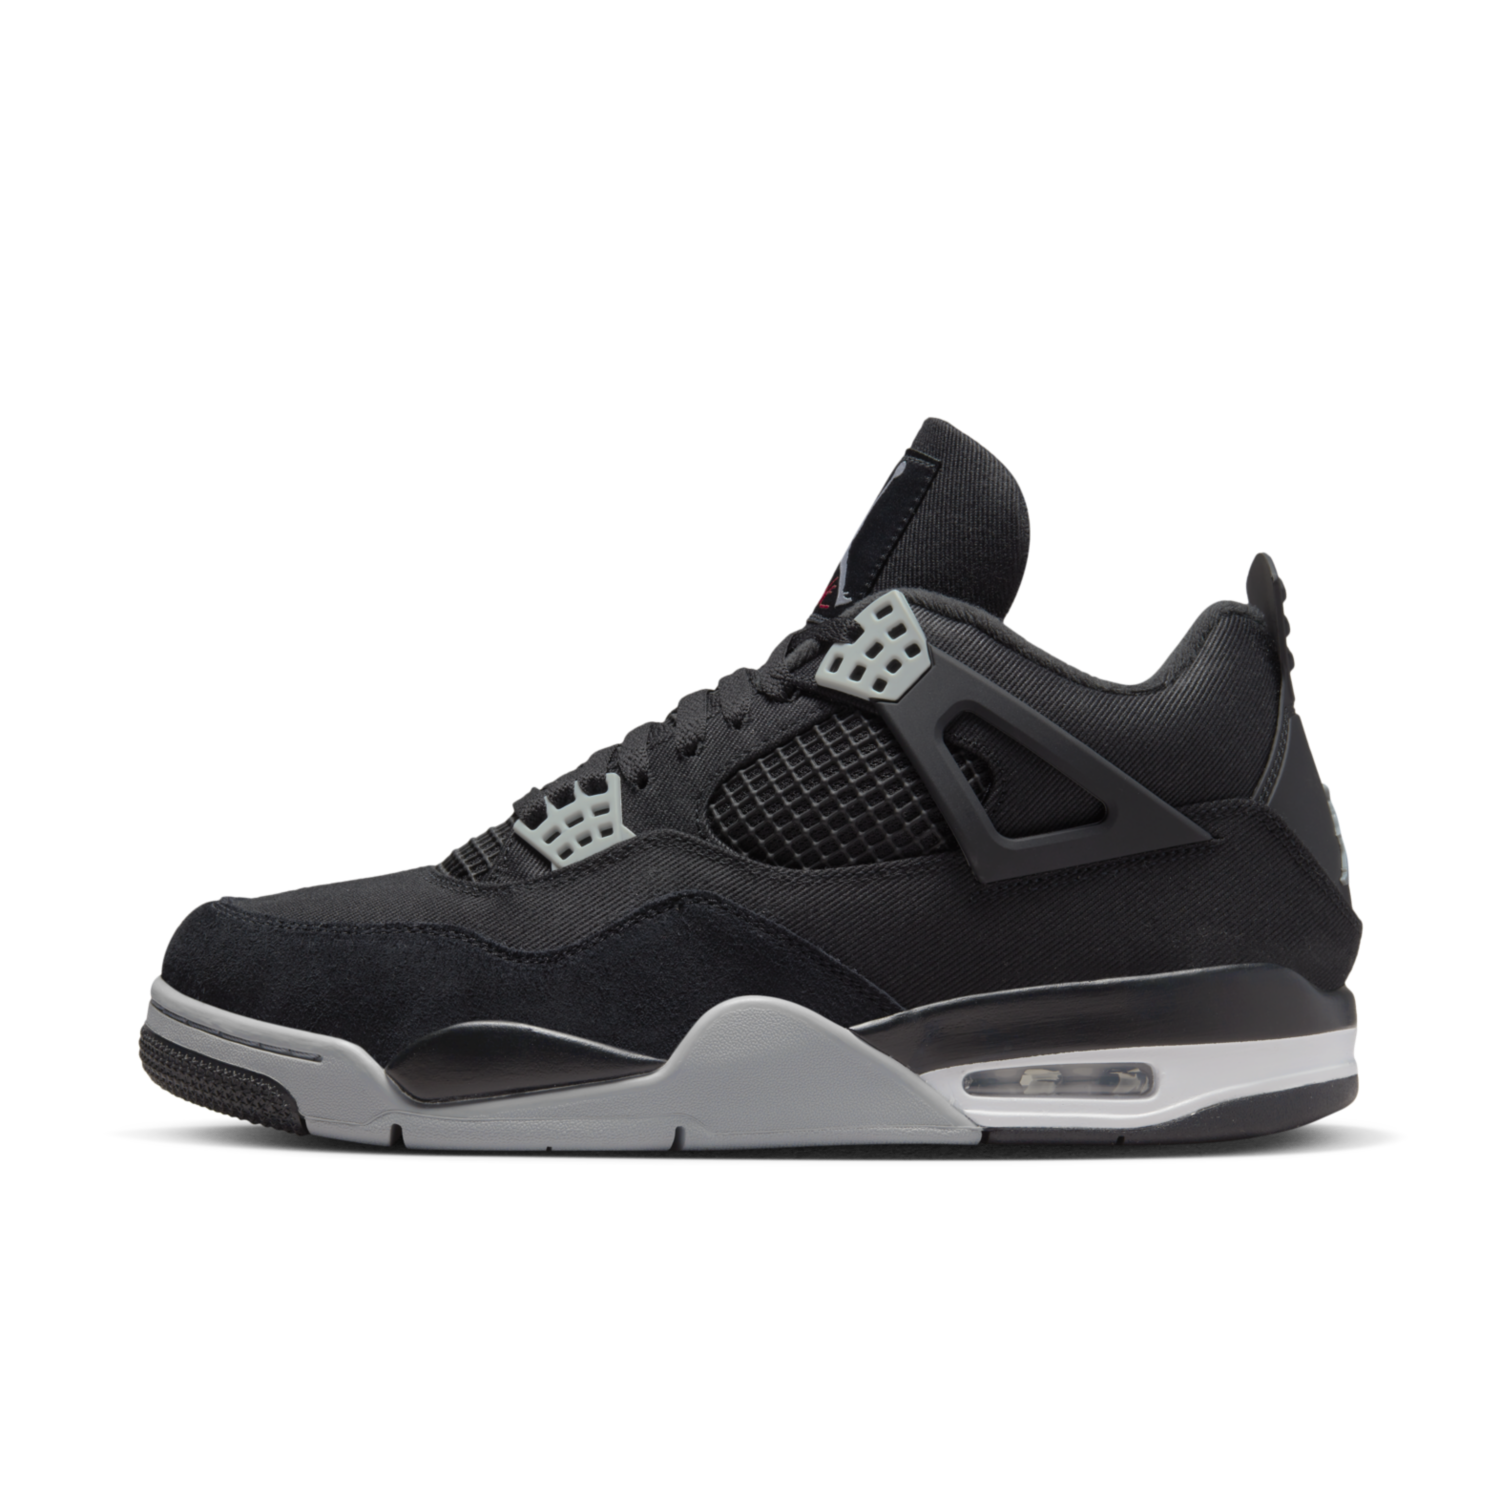 Air Jordan 4 Retro SE 'Black Canvas' Most Wanted Sneaker Releases Woche 36